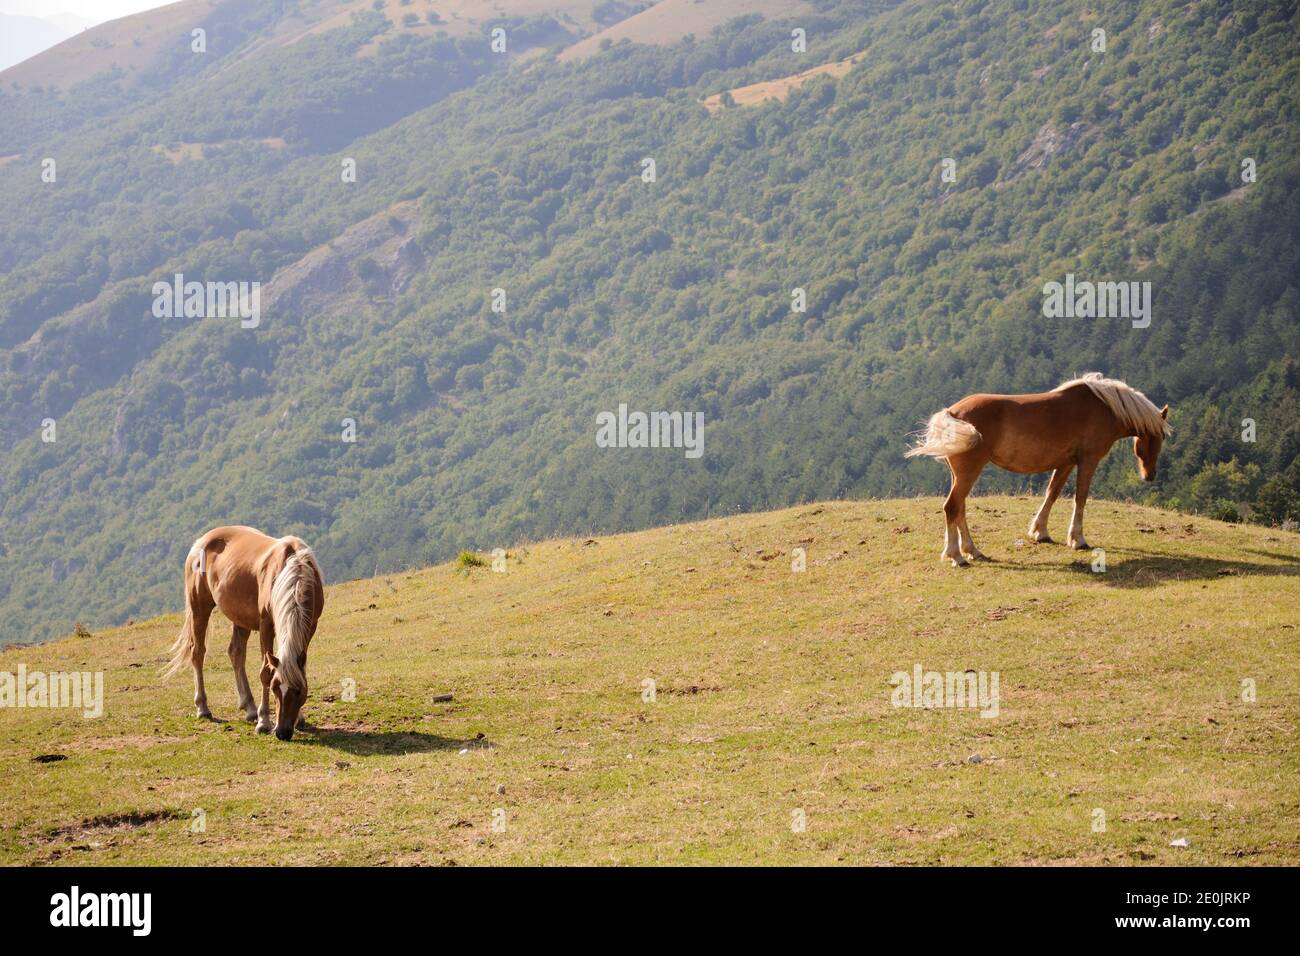 Two horses eating grass in a mountain pasture in the Monti Sibillini National Park. Pintura di Bolognola, Macerata, Marche region, Italy. Stock Photo